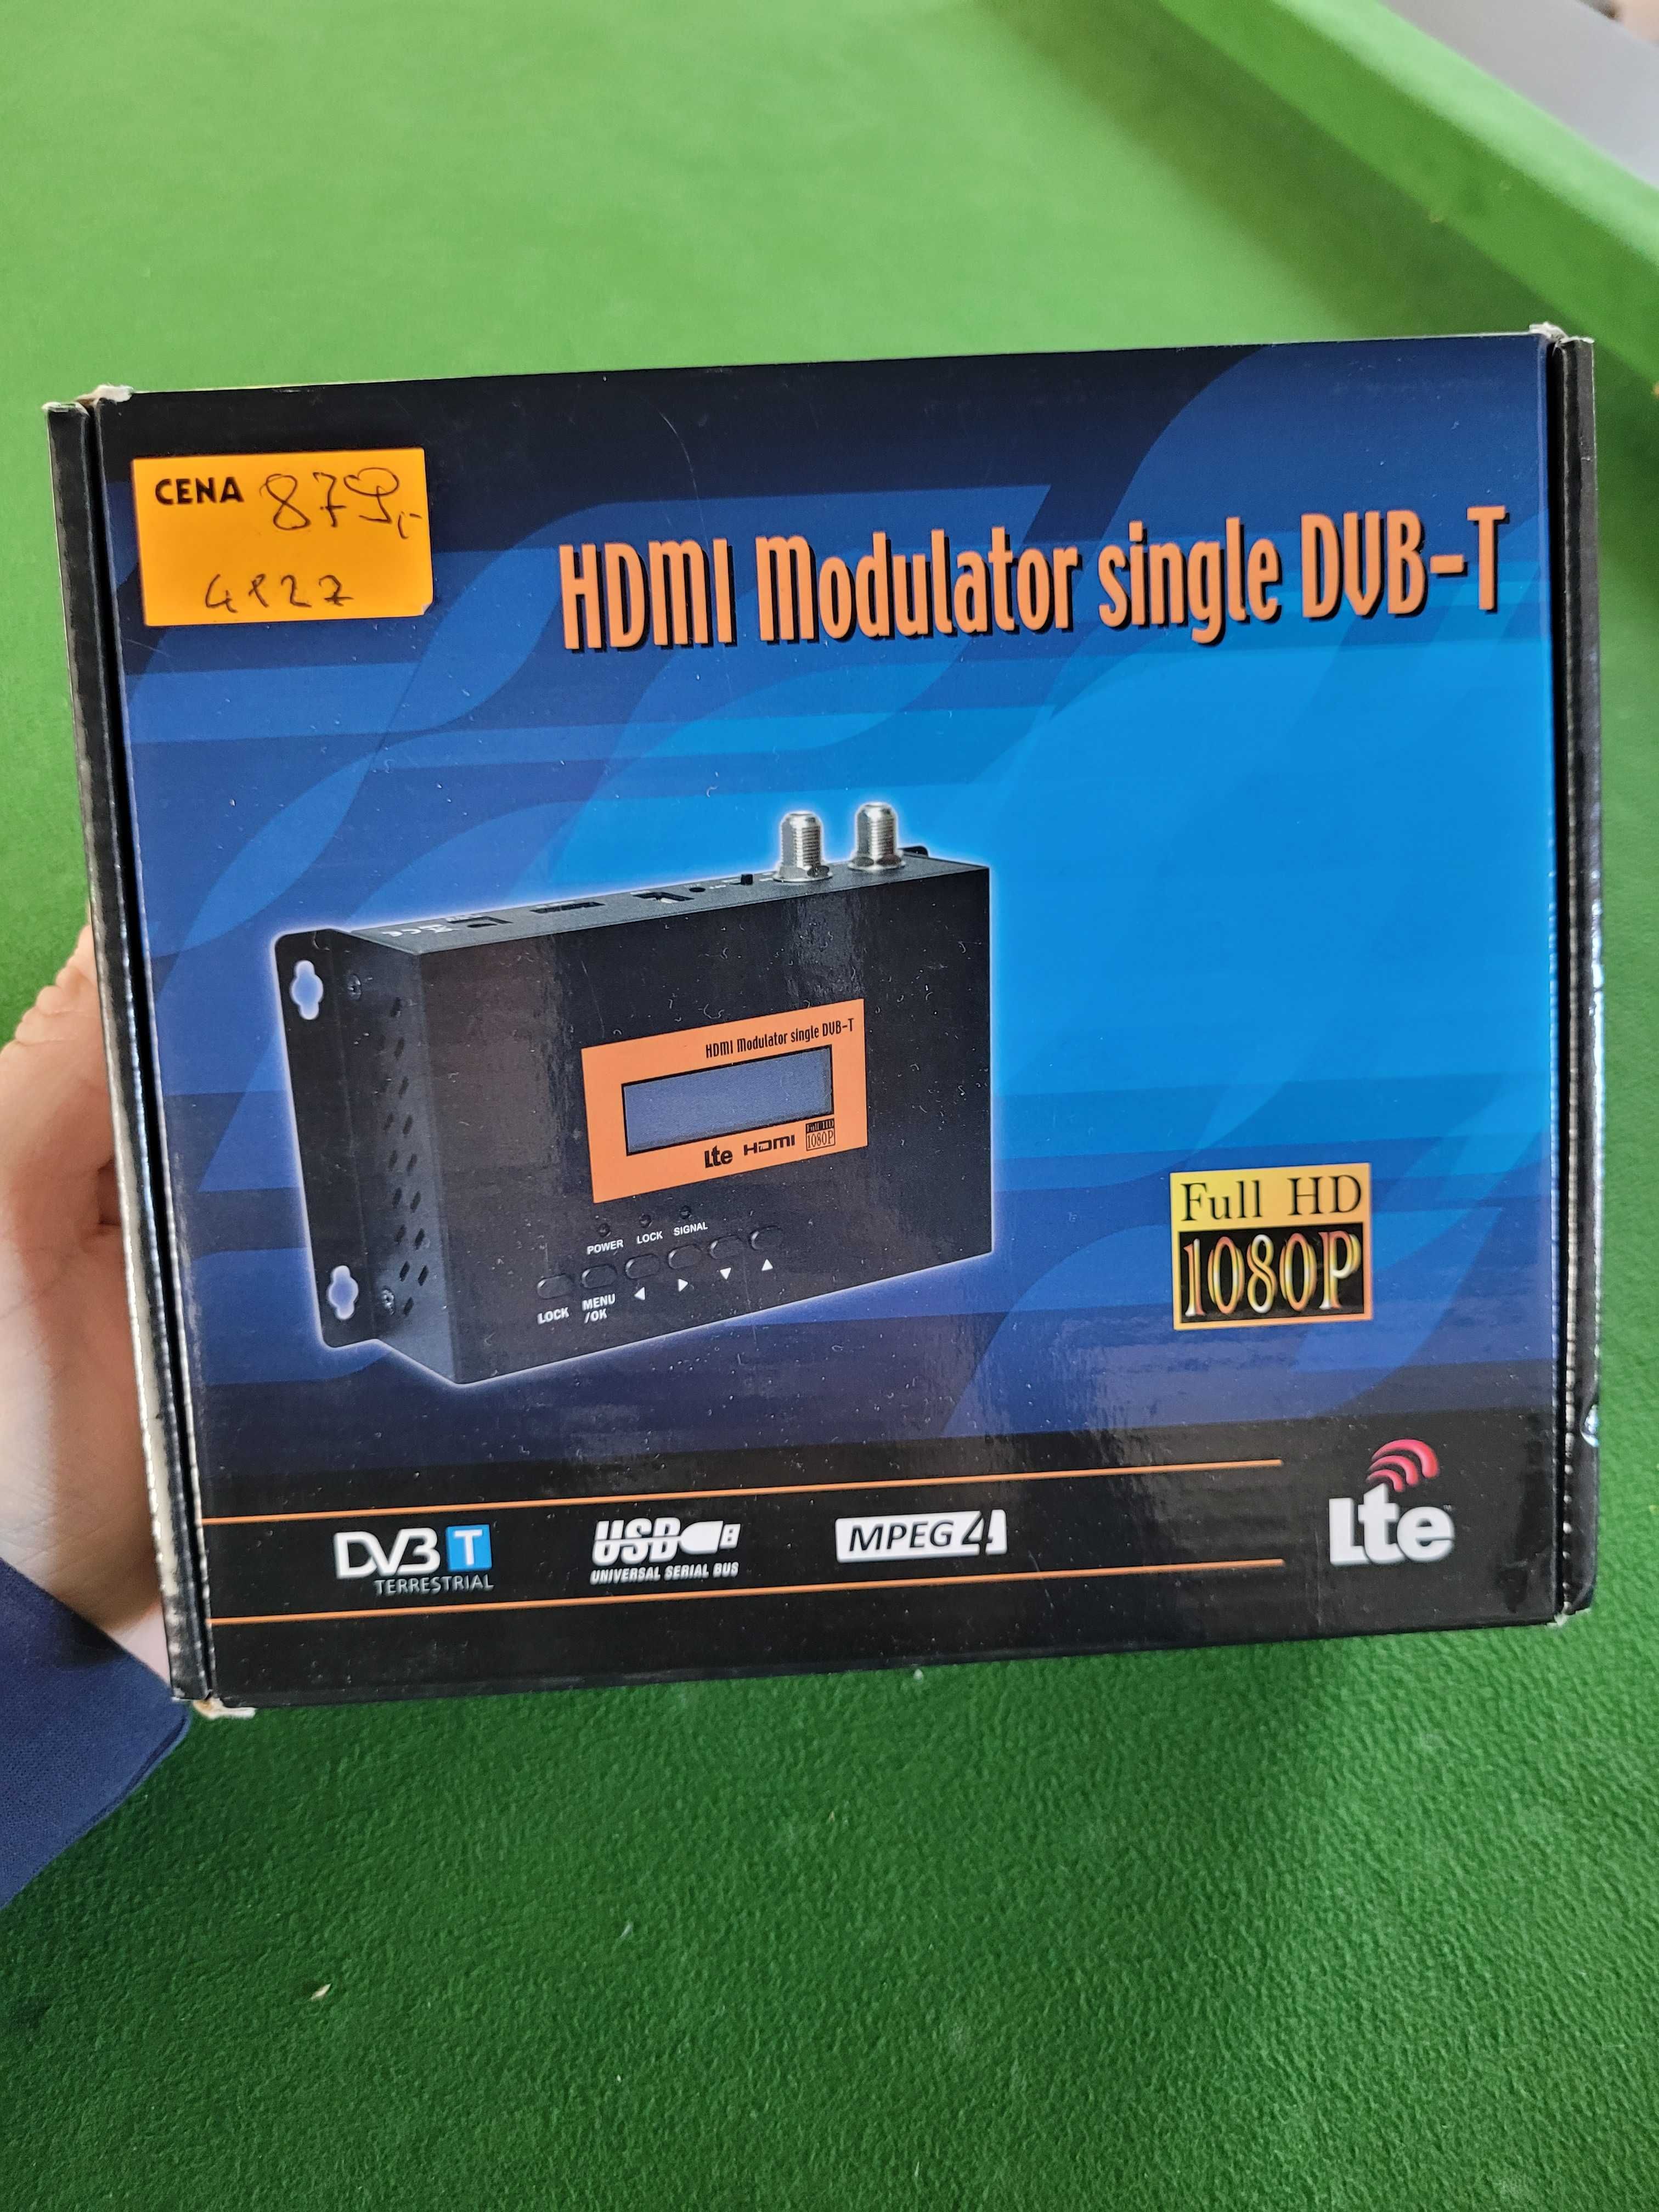 Modulator hdmi single DVB-T full hd